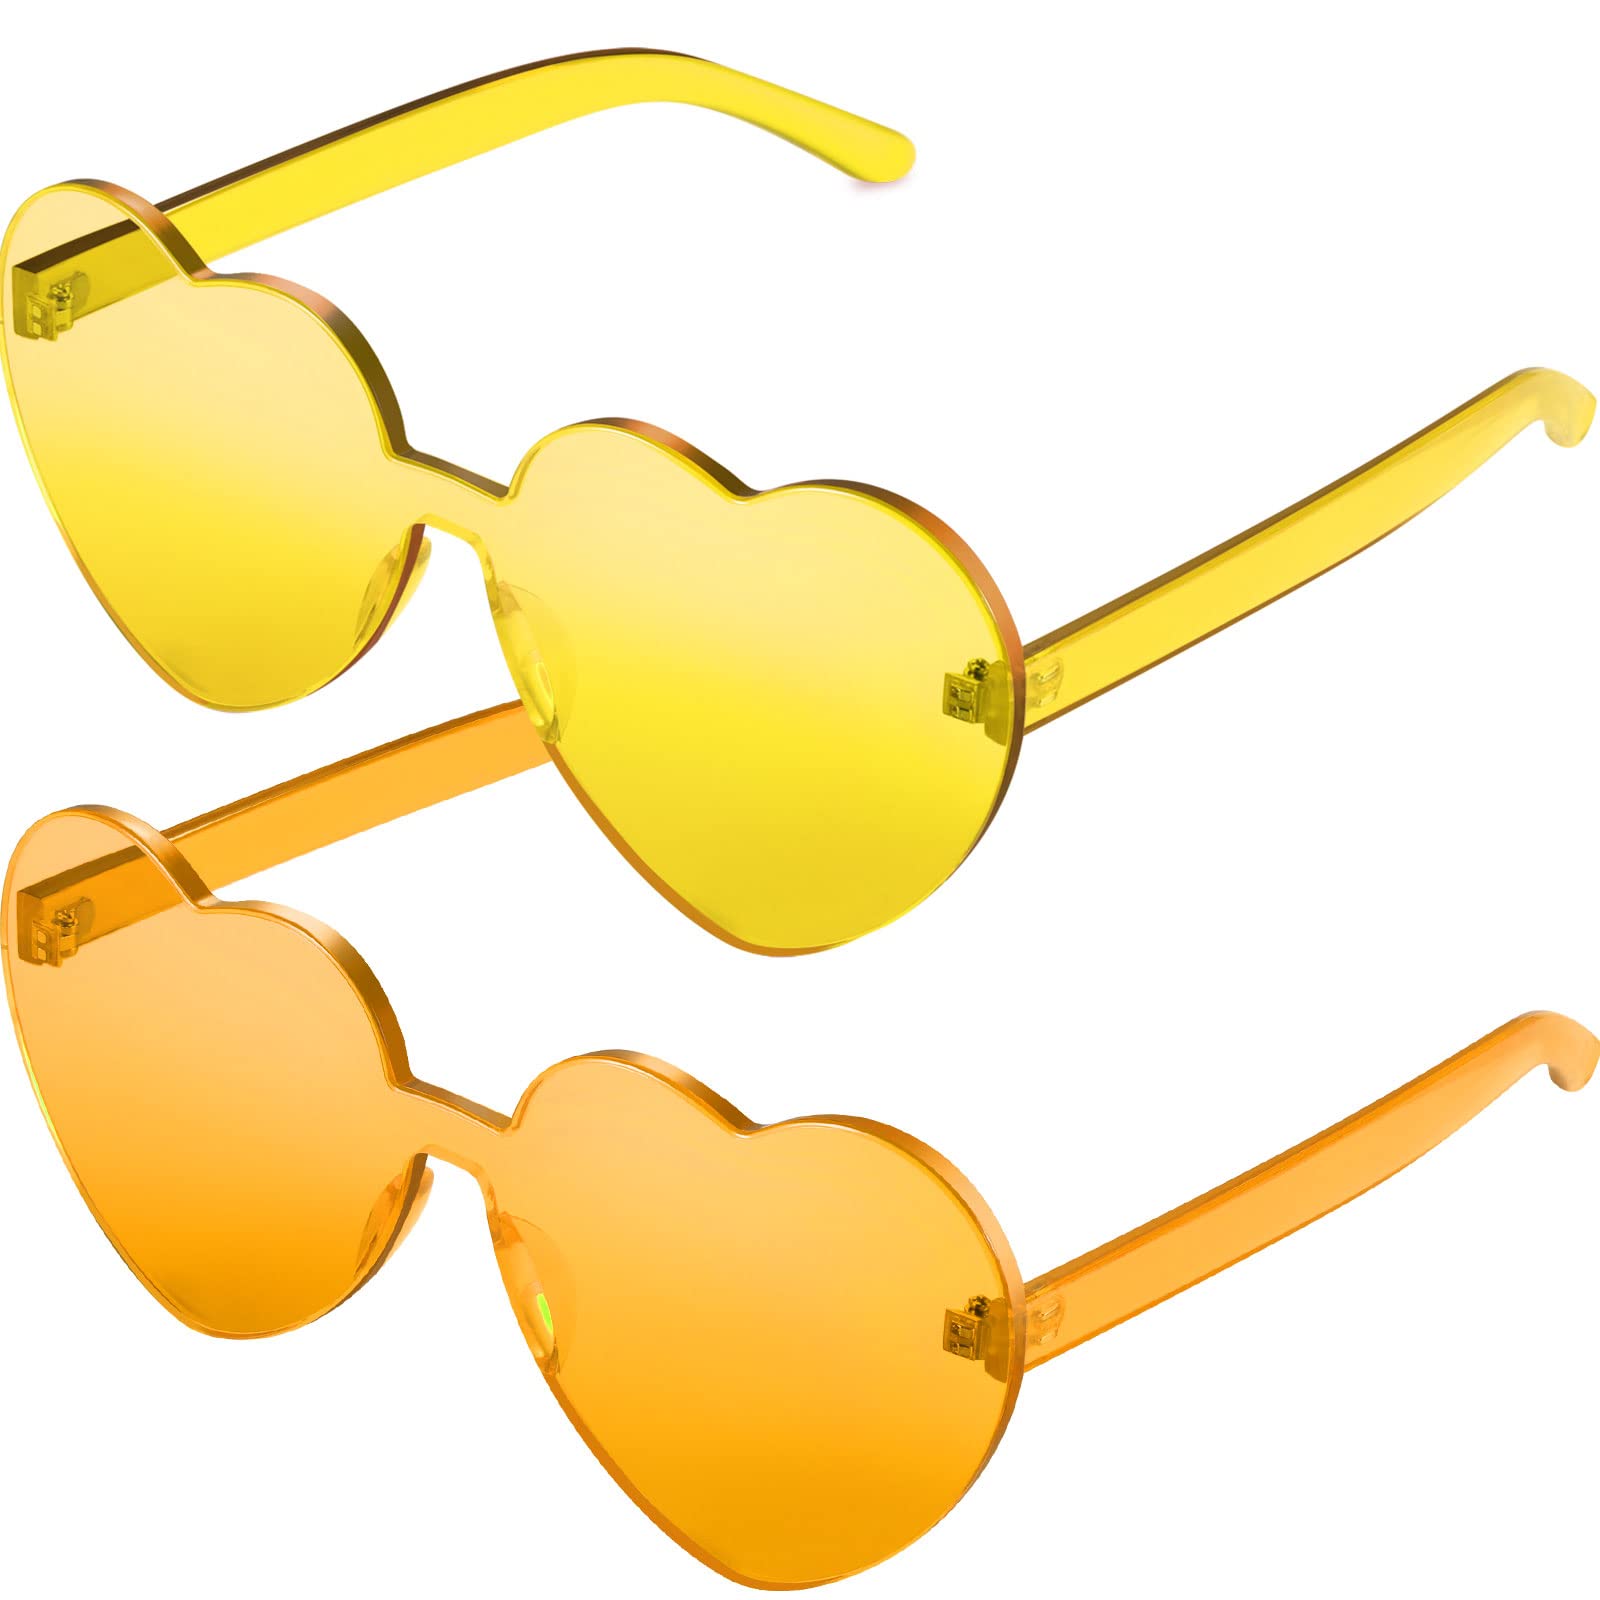 Maxdot 2 Pieces Heart Shape Rimless Sunglasses Transparent Candy Color Frameless Glasses Love Eyewear ()